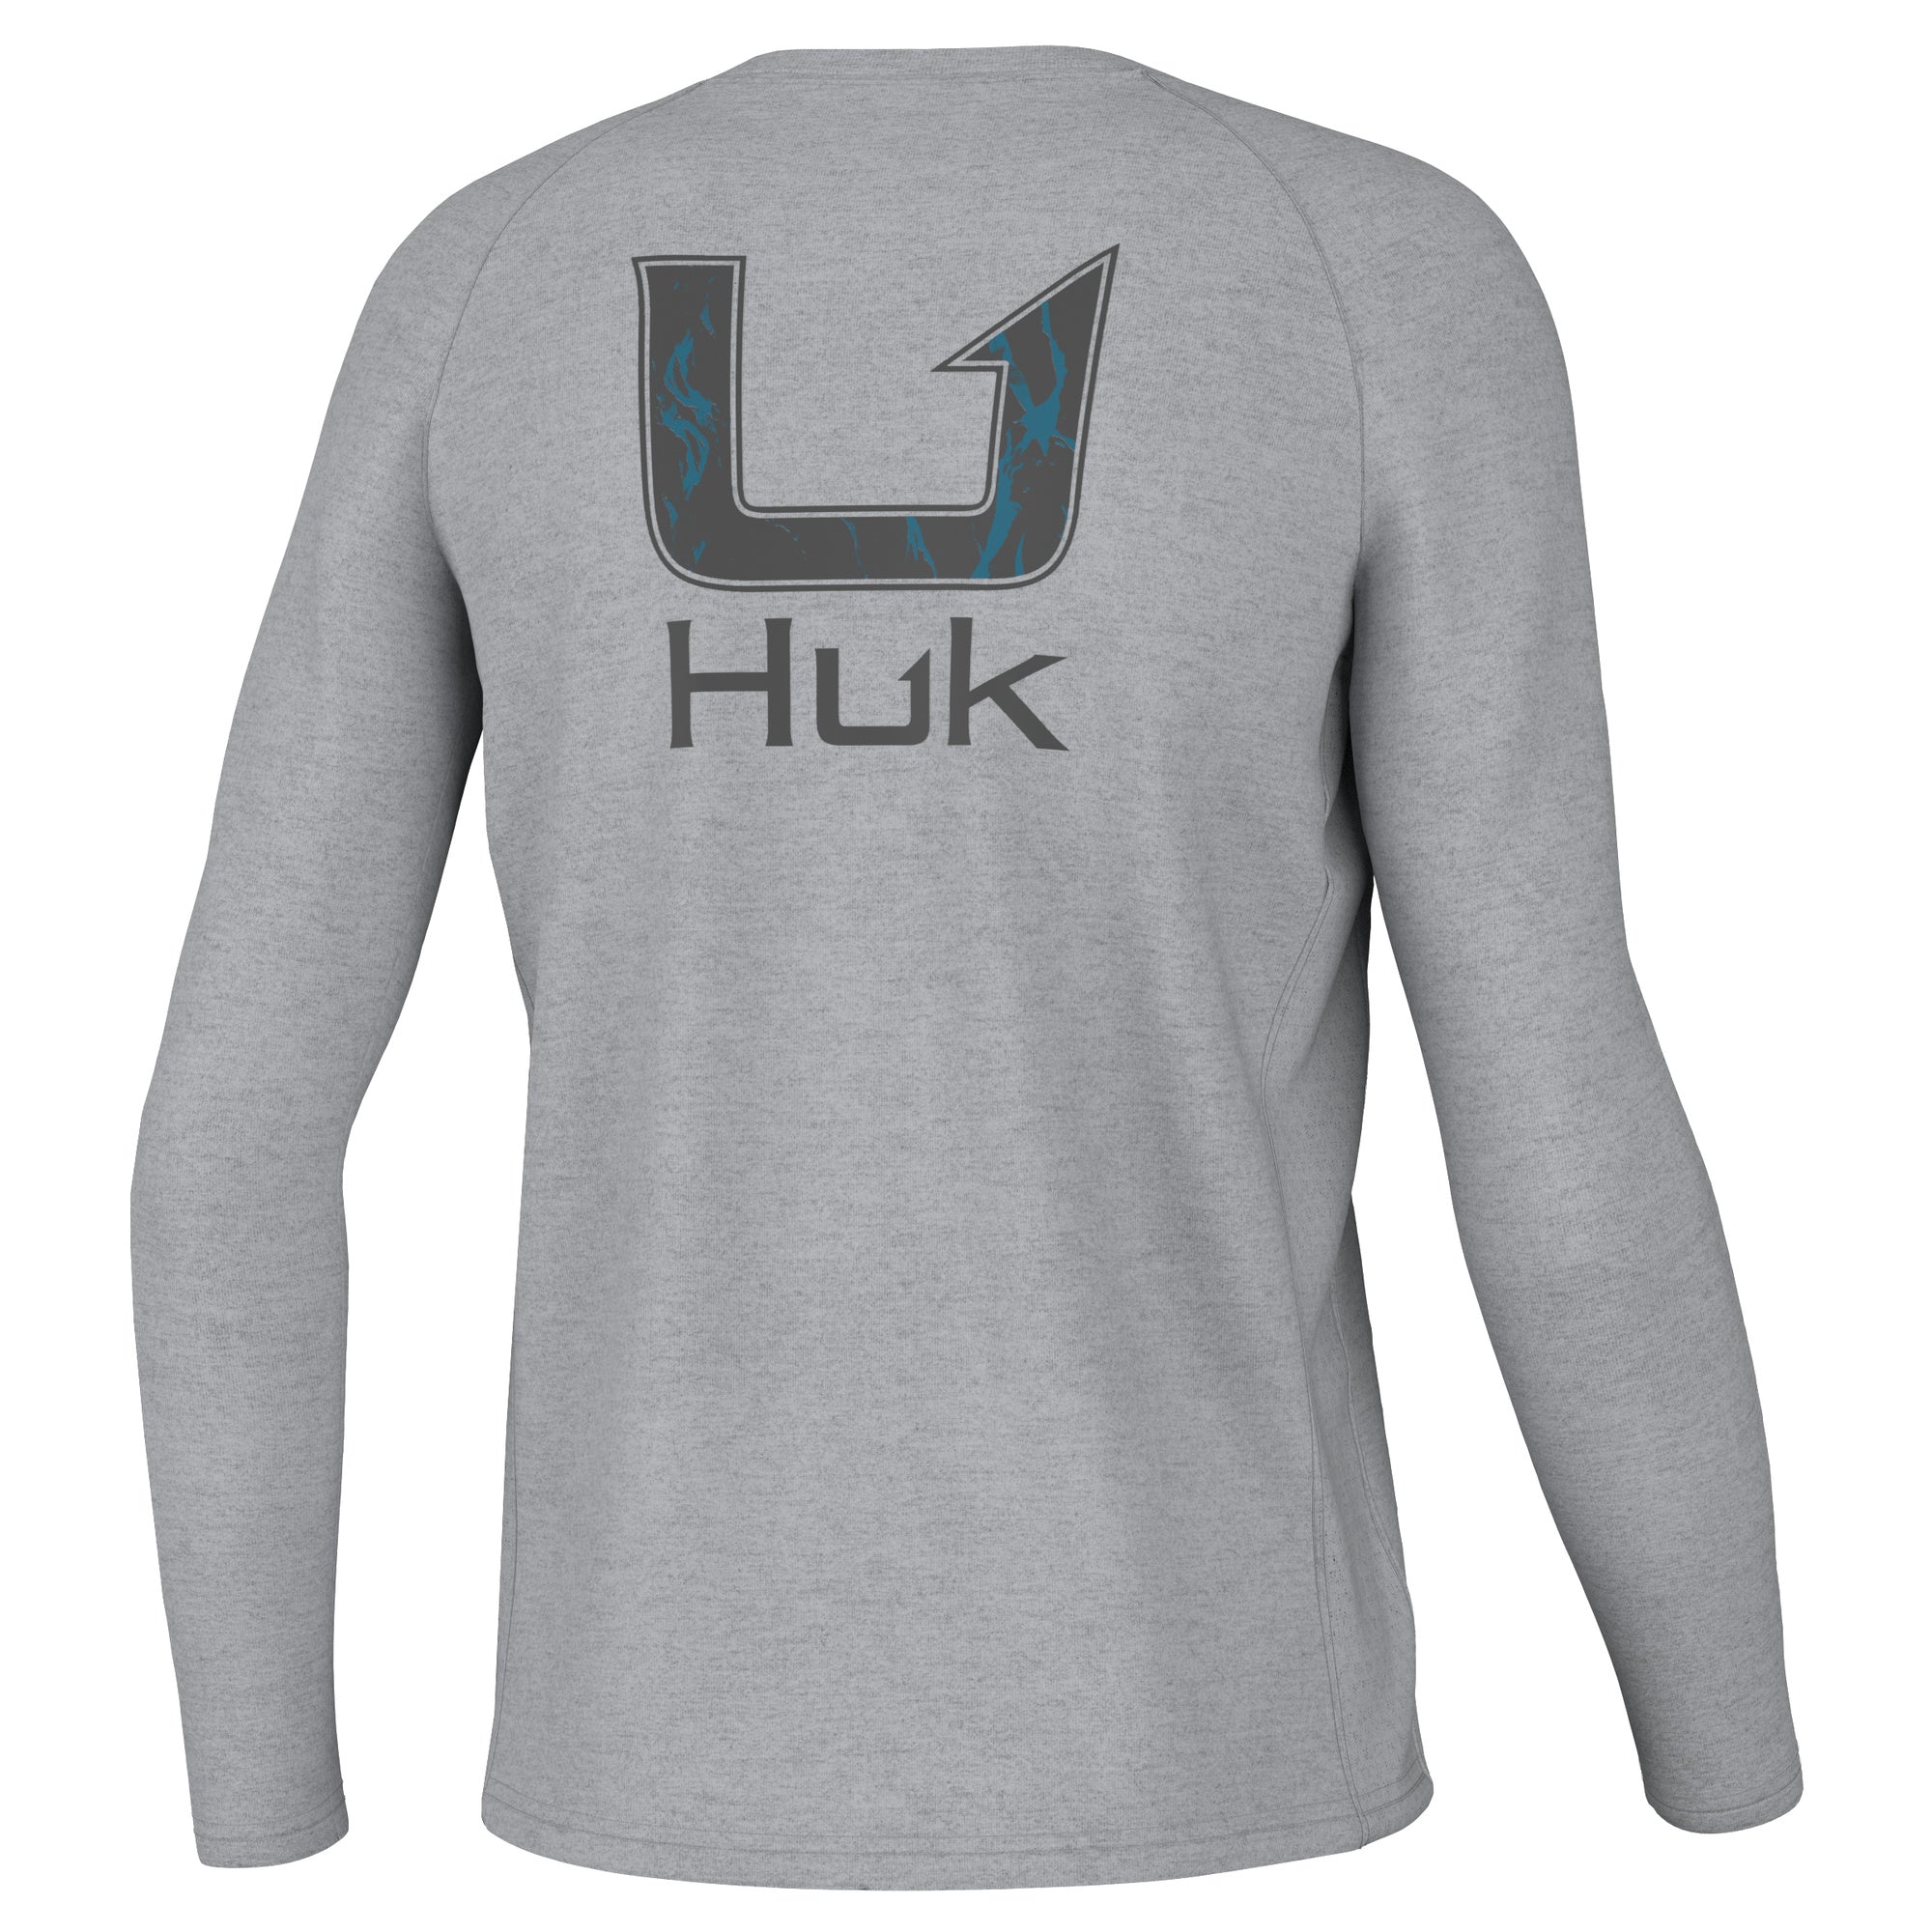 Huk Mossy Oak Pursuit Performance Shirt – Huk Gear